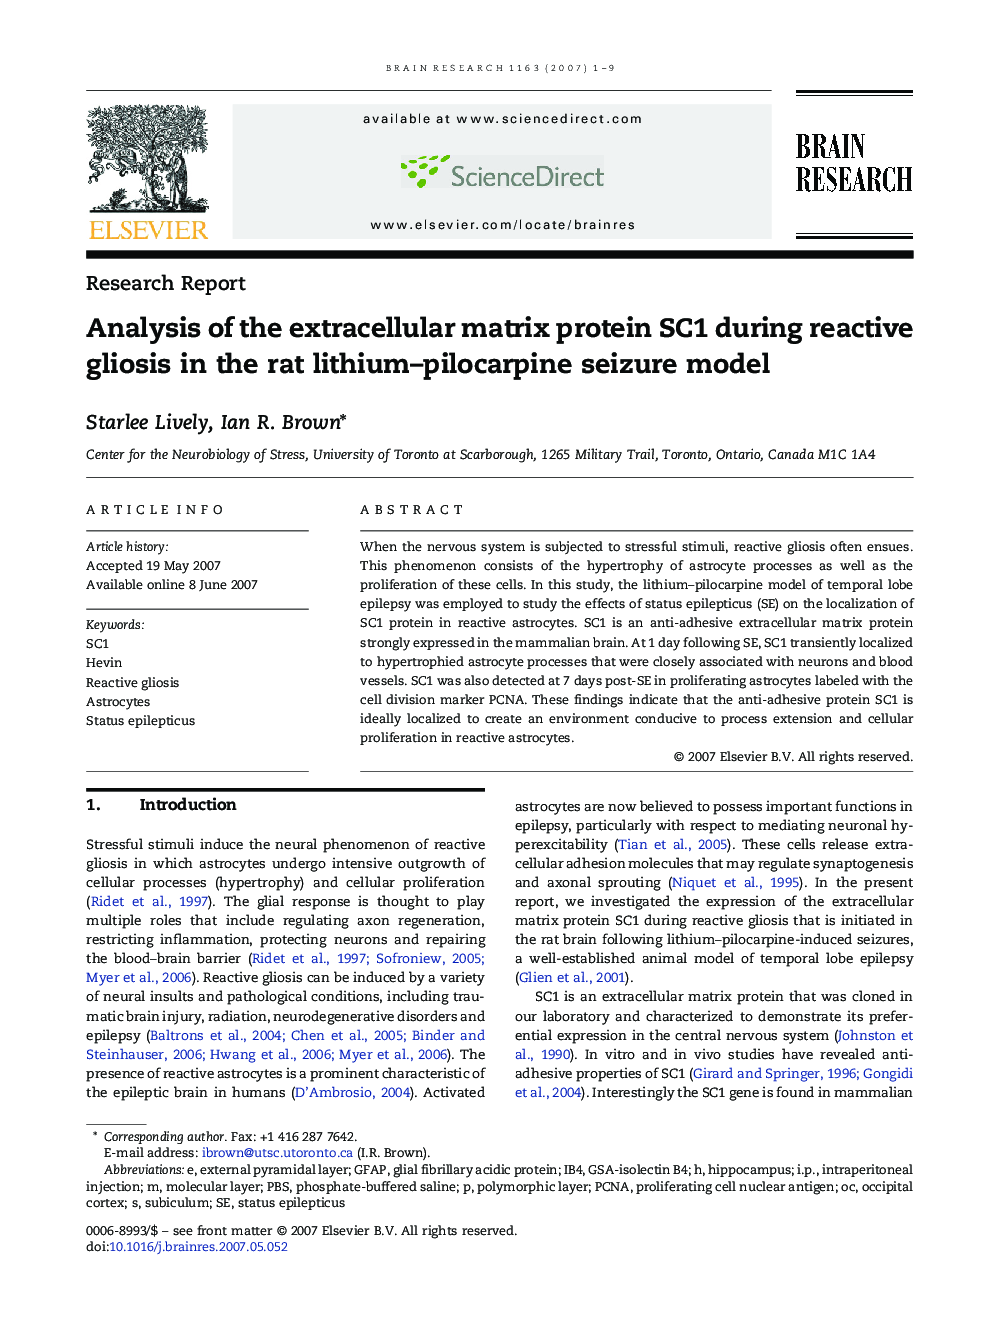 Analysis of the extracellular matrix protein SC1 during reactive gliosis in the rat lithium–pilocarpine seizure model